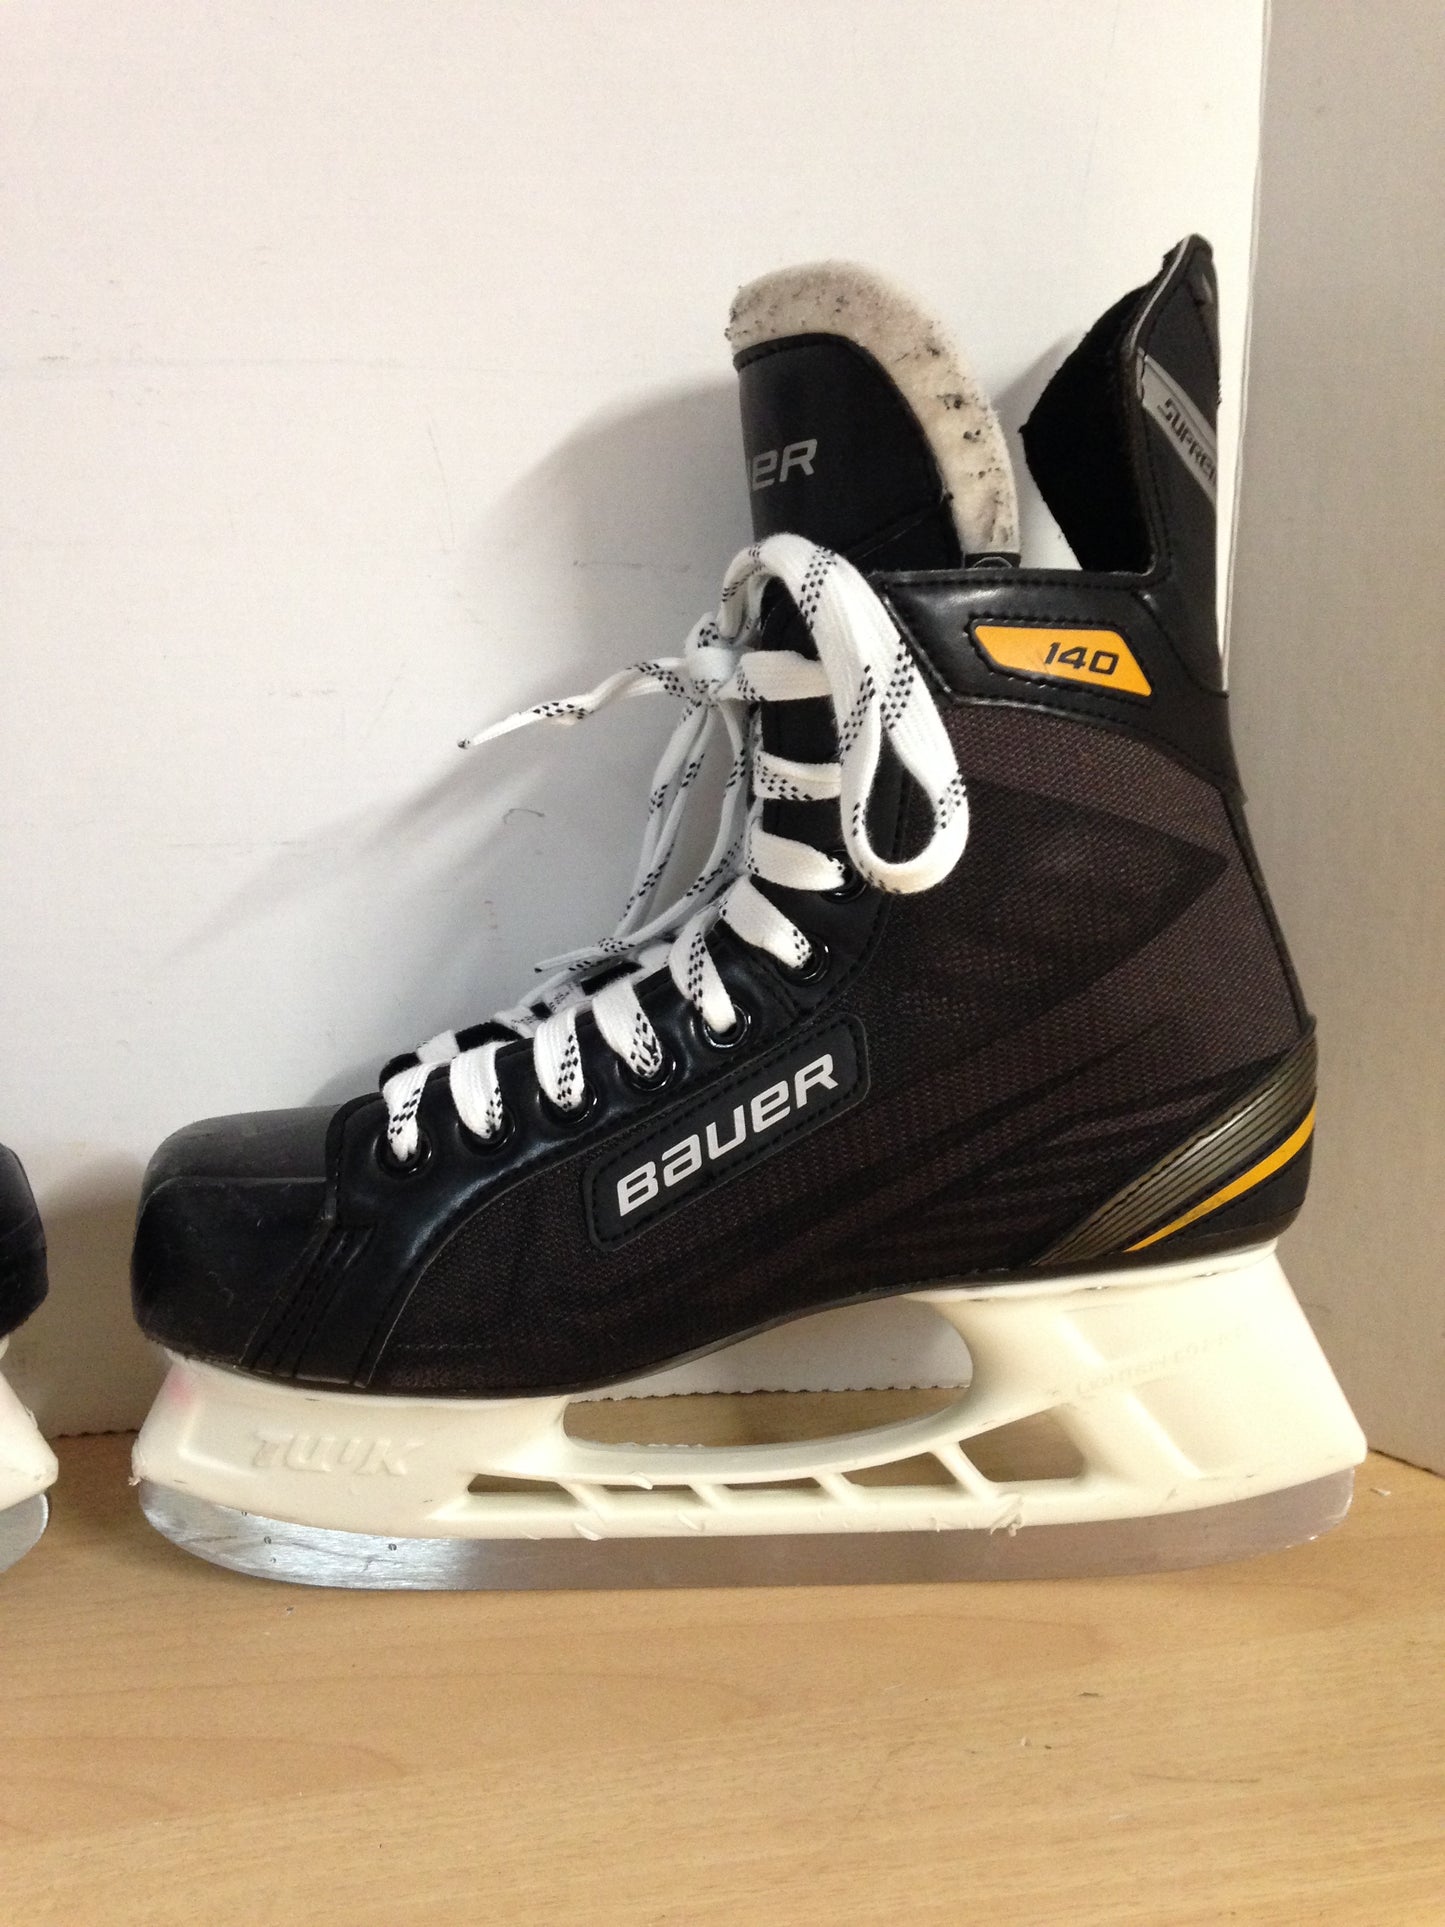 Hockey Skates Men's Size 8.5 Shoe Size Bauer Supreme 140 Excellent